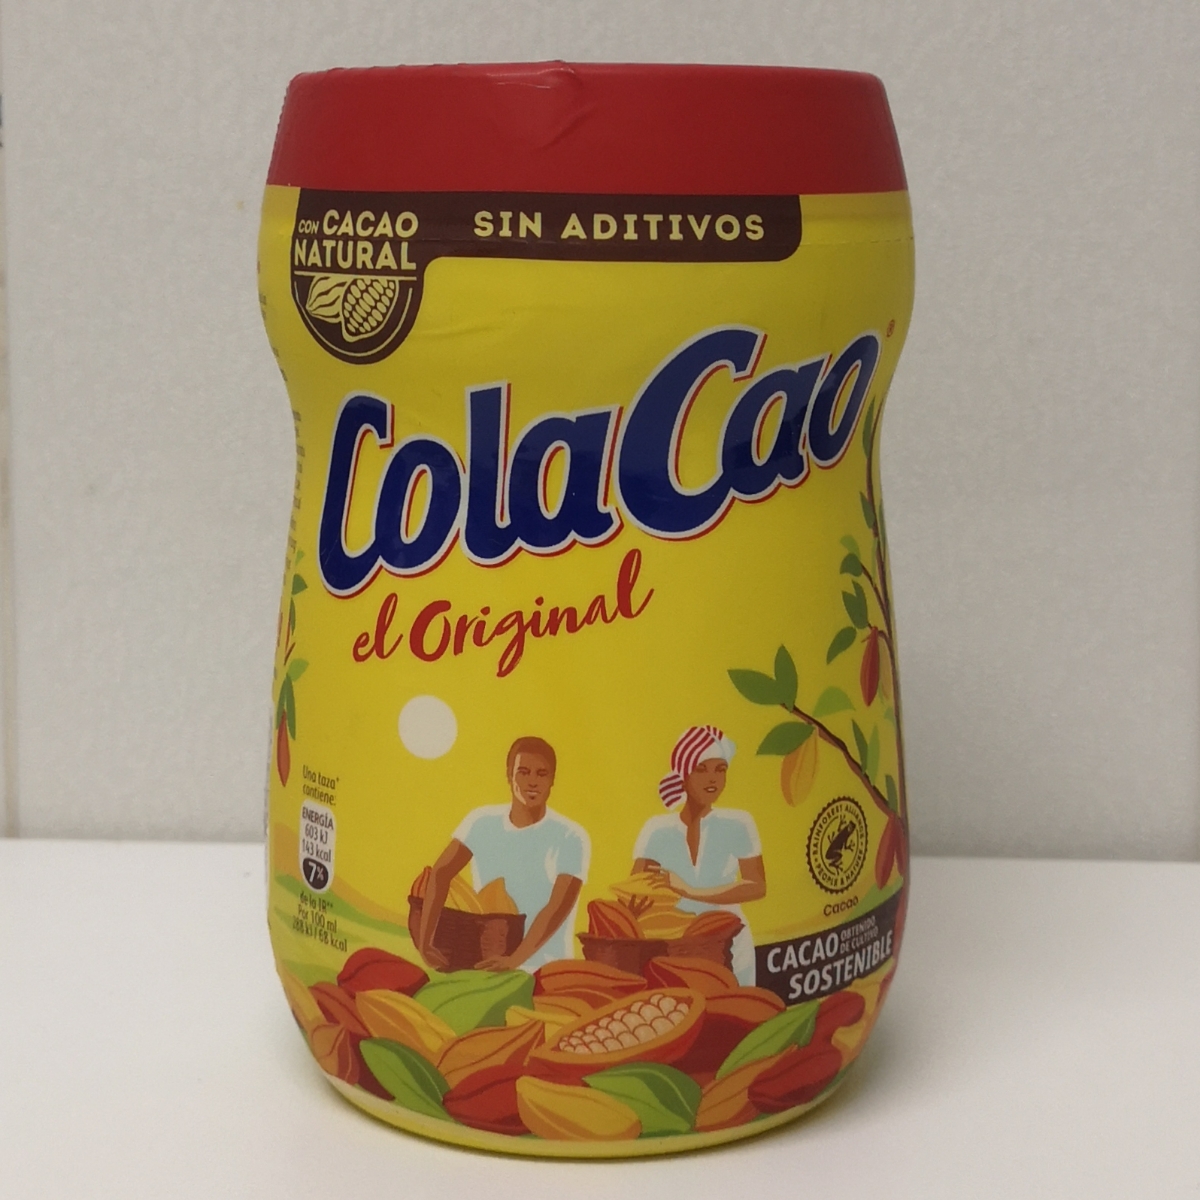 COLACAO TURBO 🆚 ORIGINAL #colacao #colacaoturbo #colacaooriginal😅